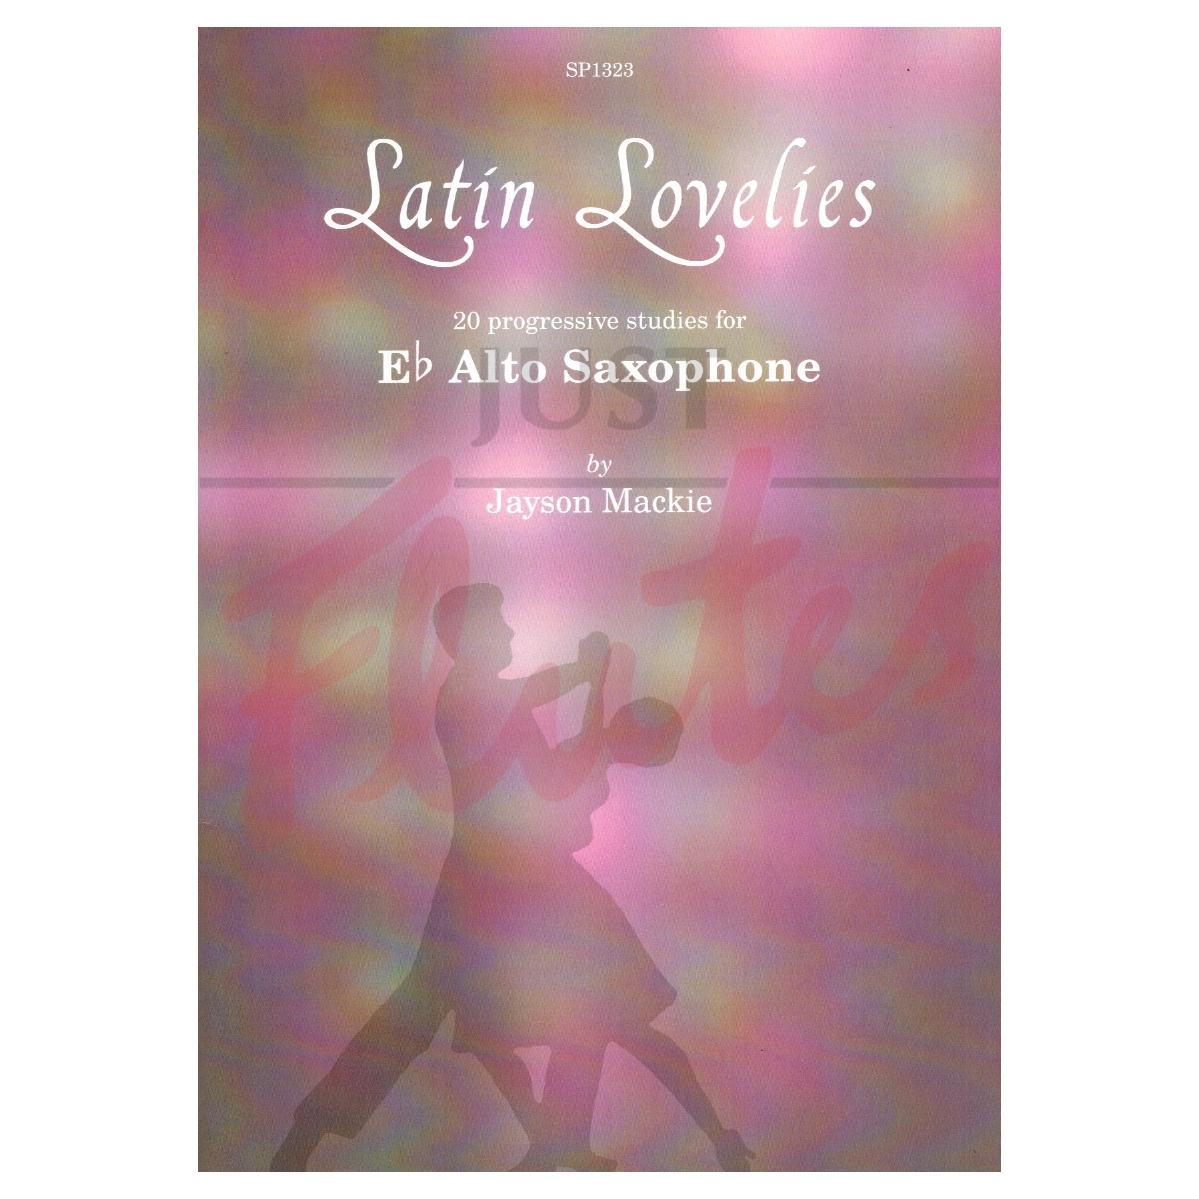 Latin Lovelies for Eb Saxophone - 30 Progressive Studies